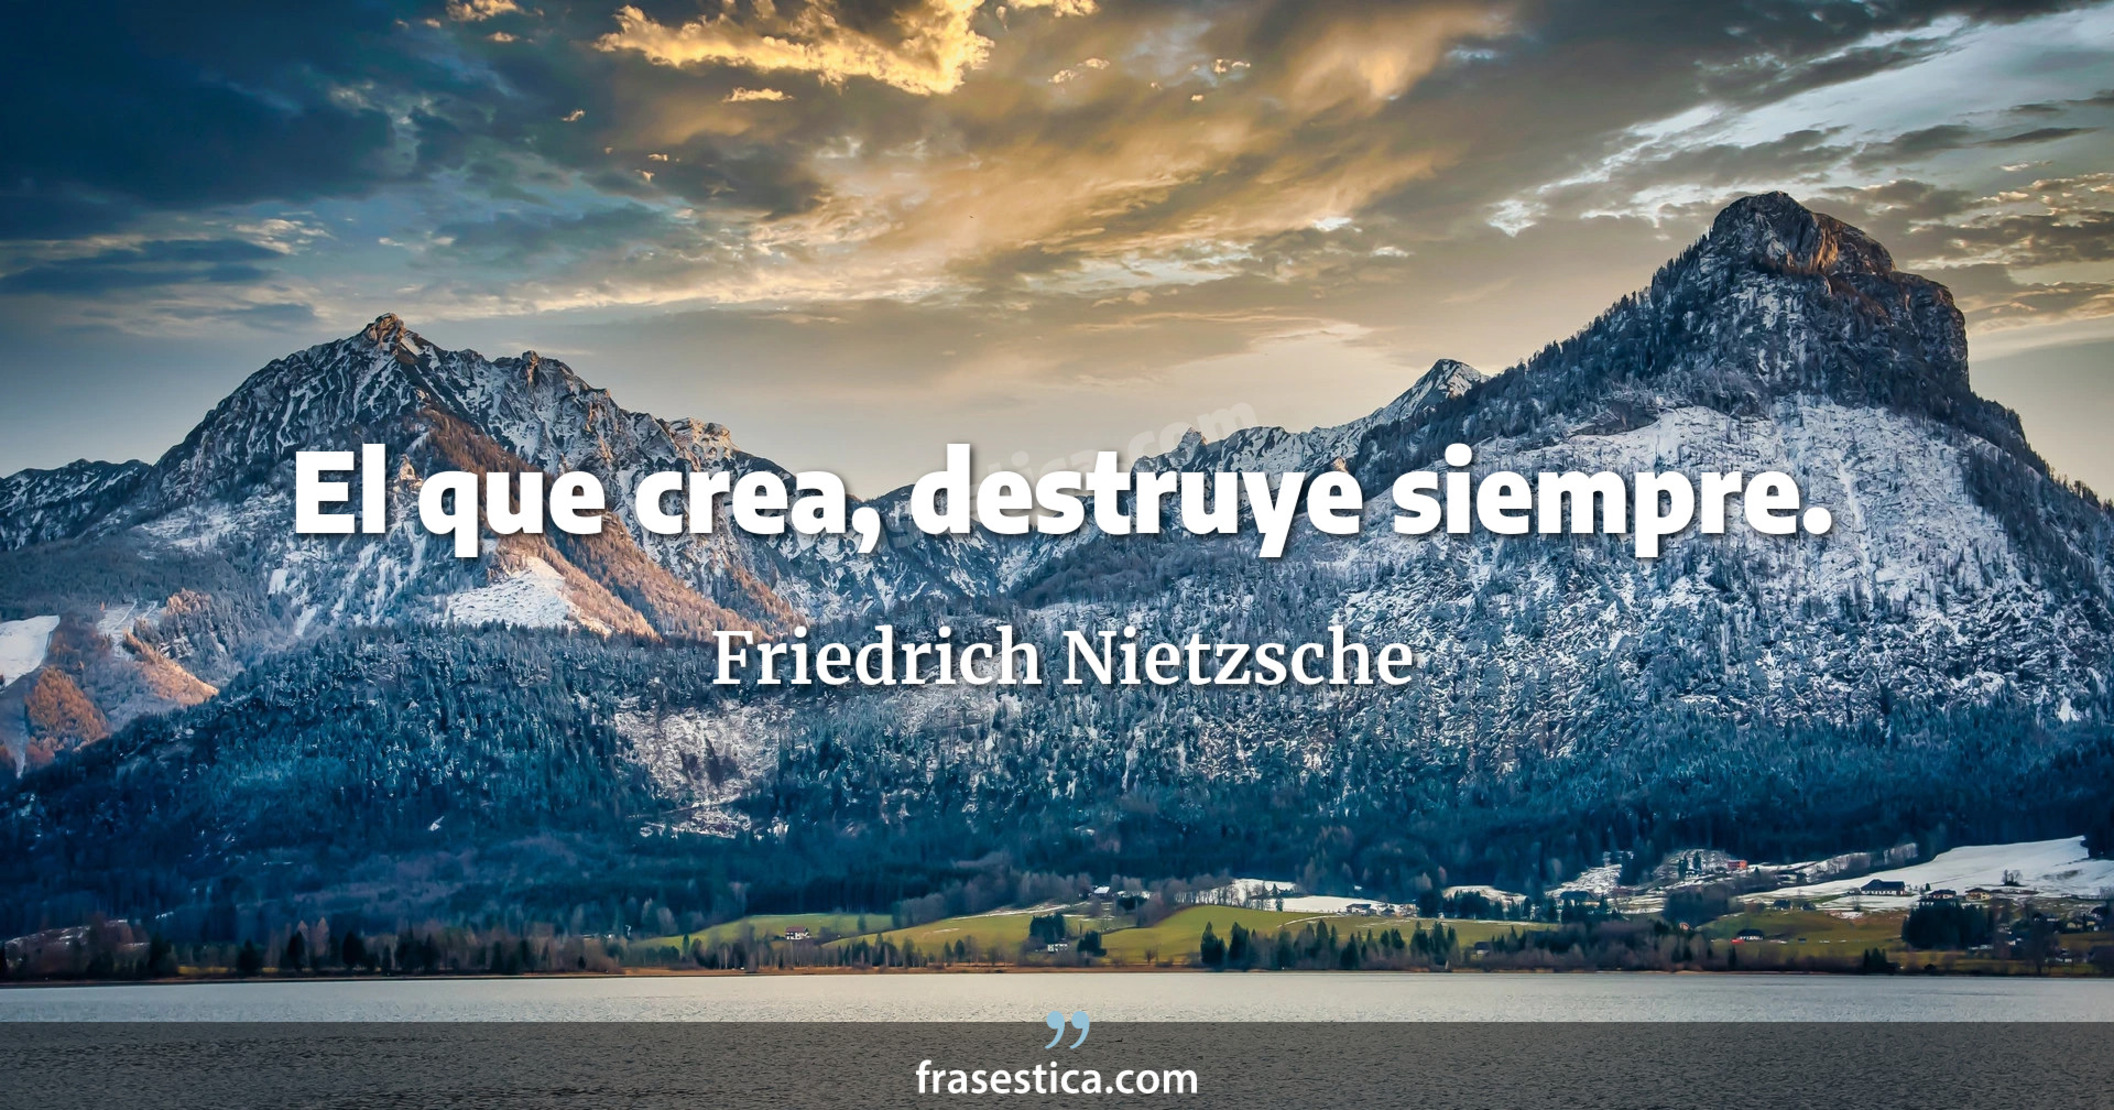 El que crea, destruye siempre. - Friedrich Nietzsche